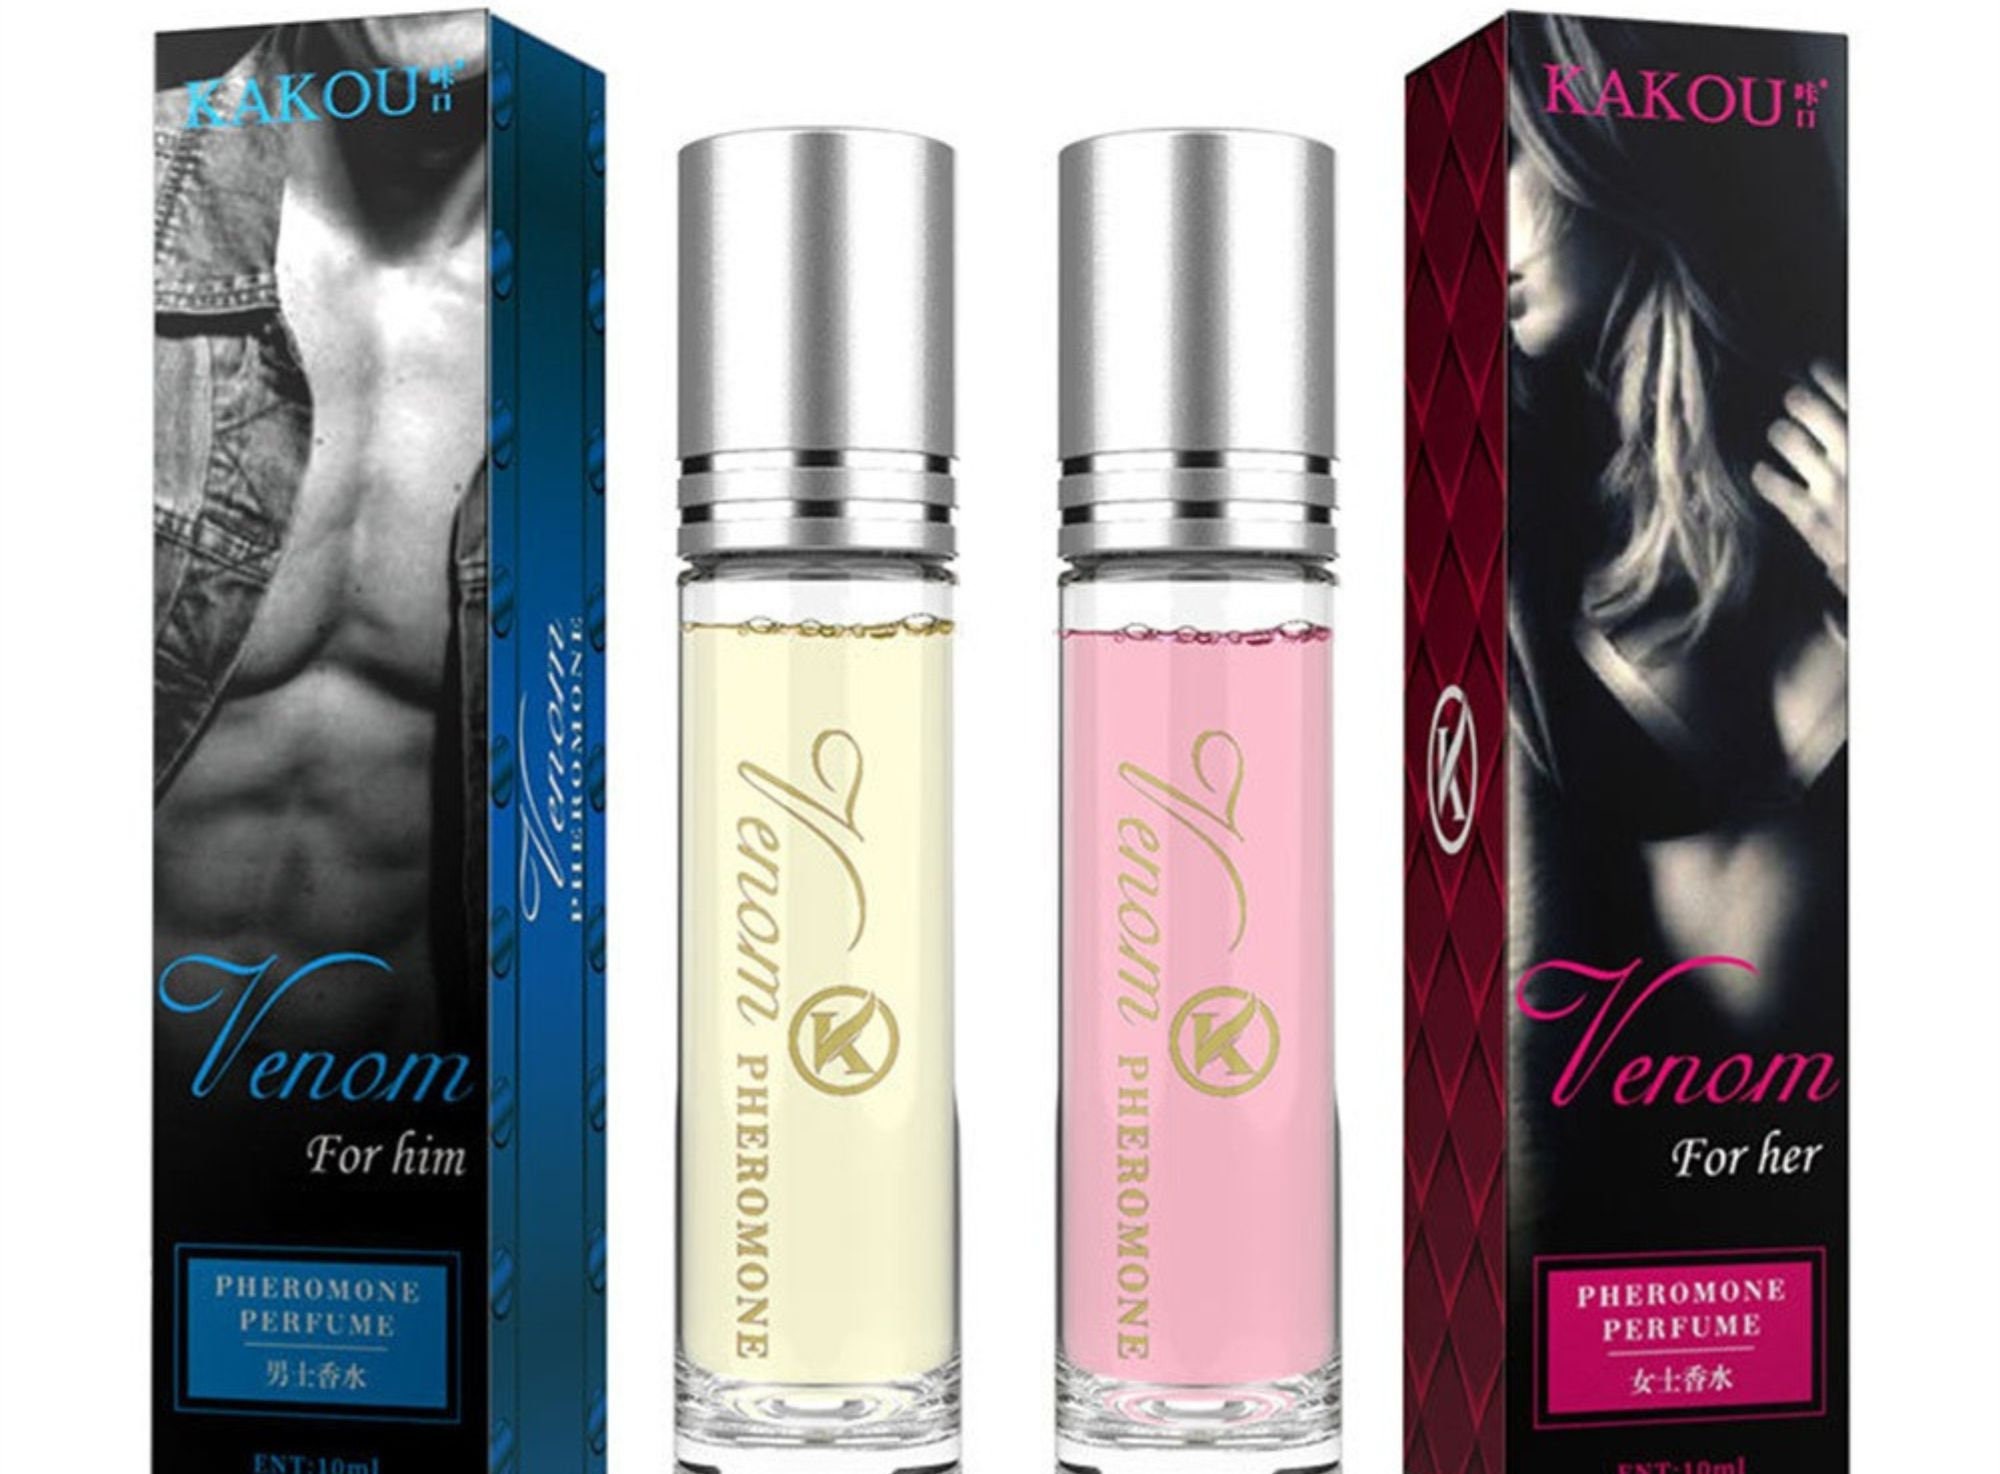 AMBITION. Pheromone Perfume